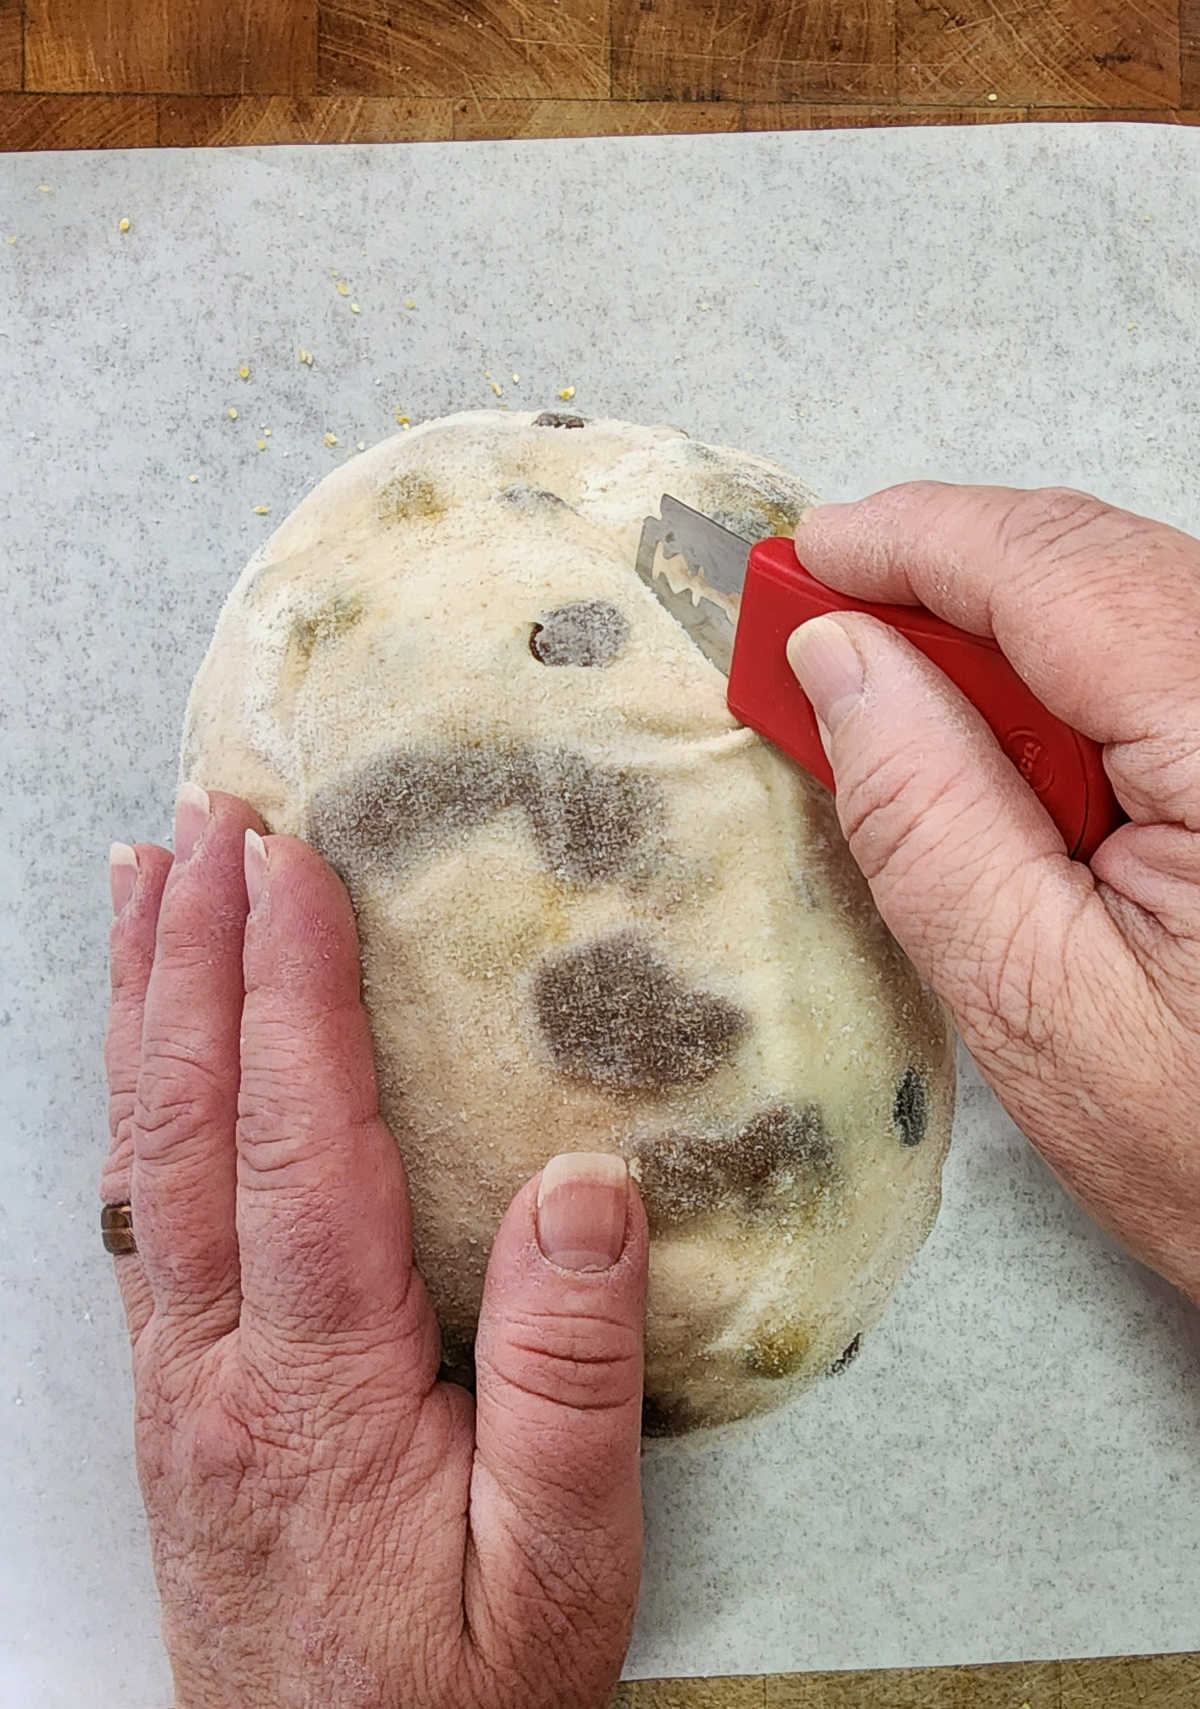 Hand holding red bread lame cutting into cinnamon raisin sourdough on butcher block.